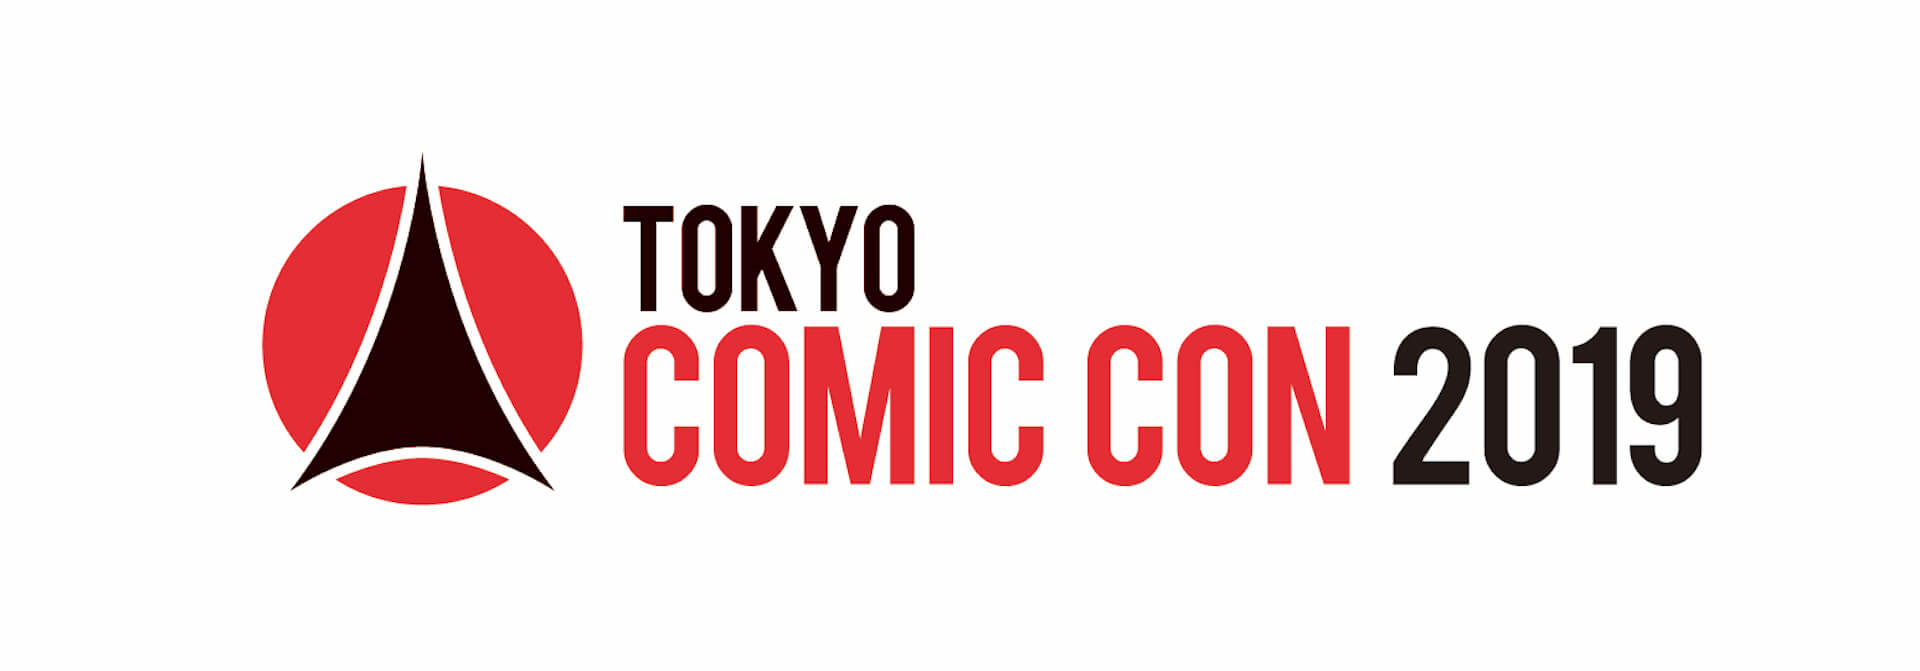 TOKYO COMIC CON